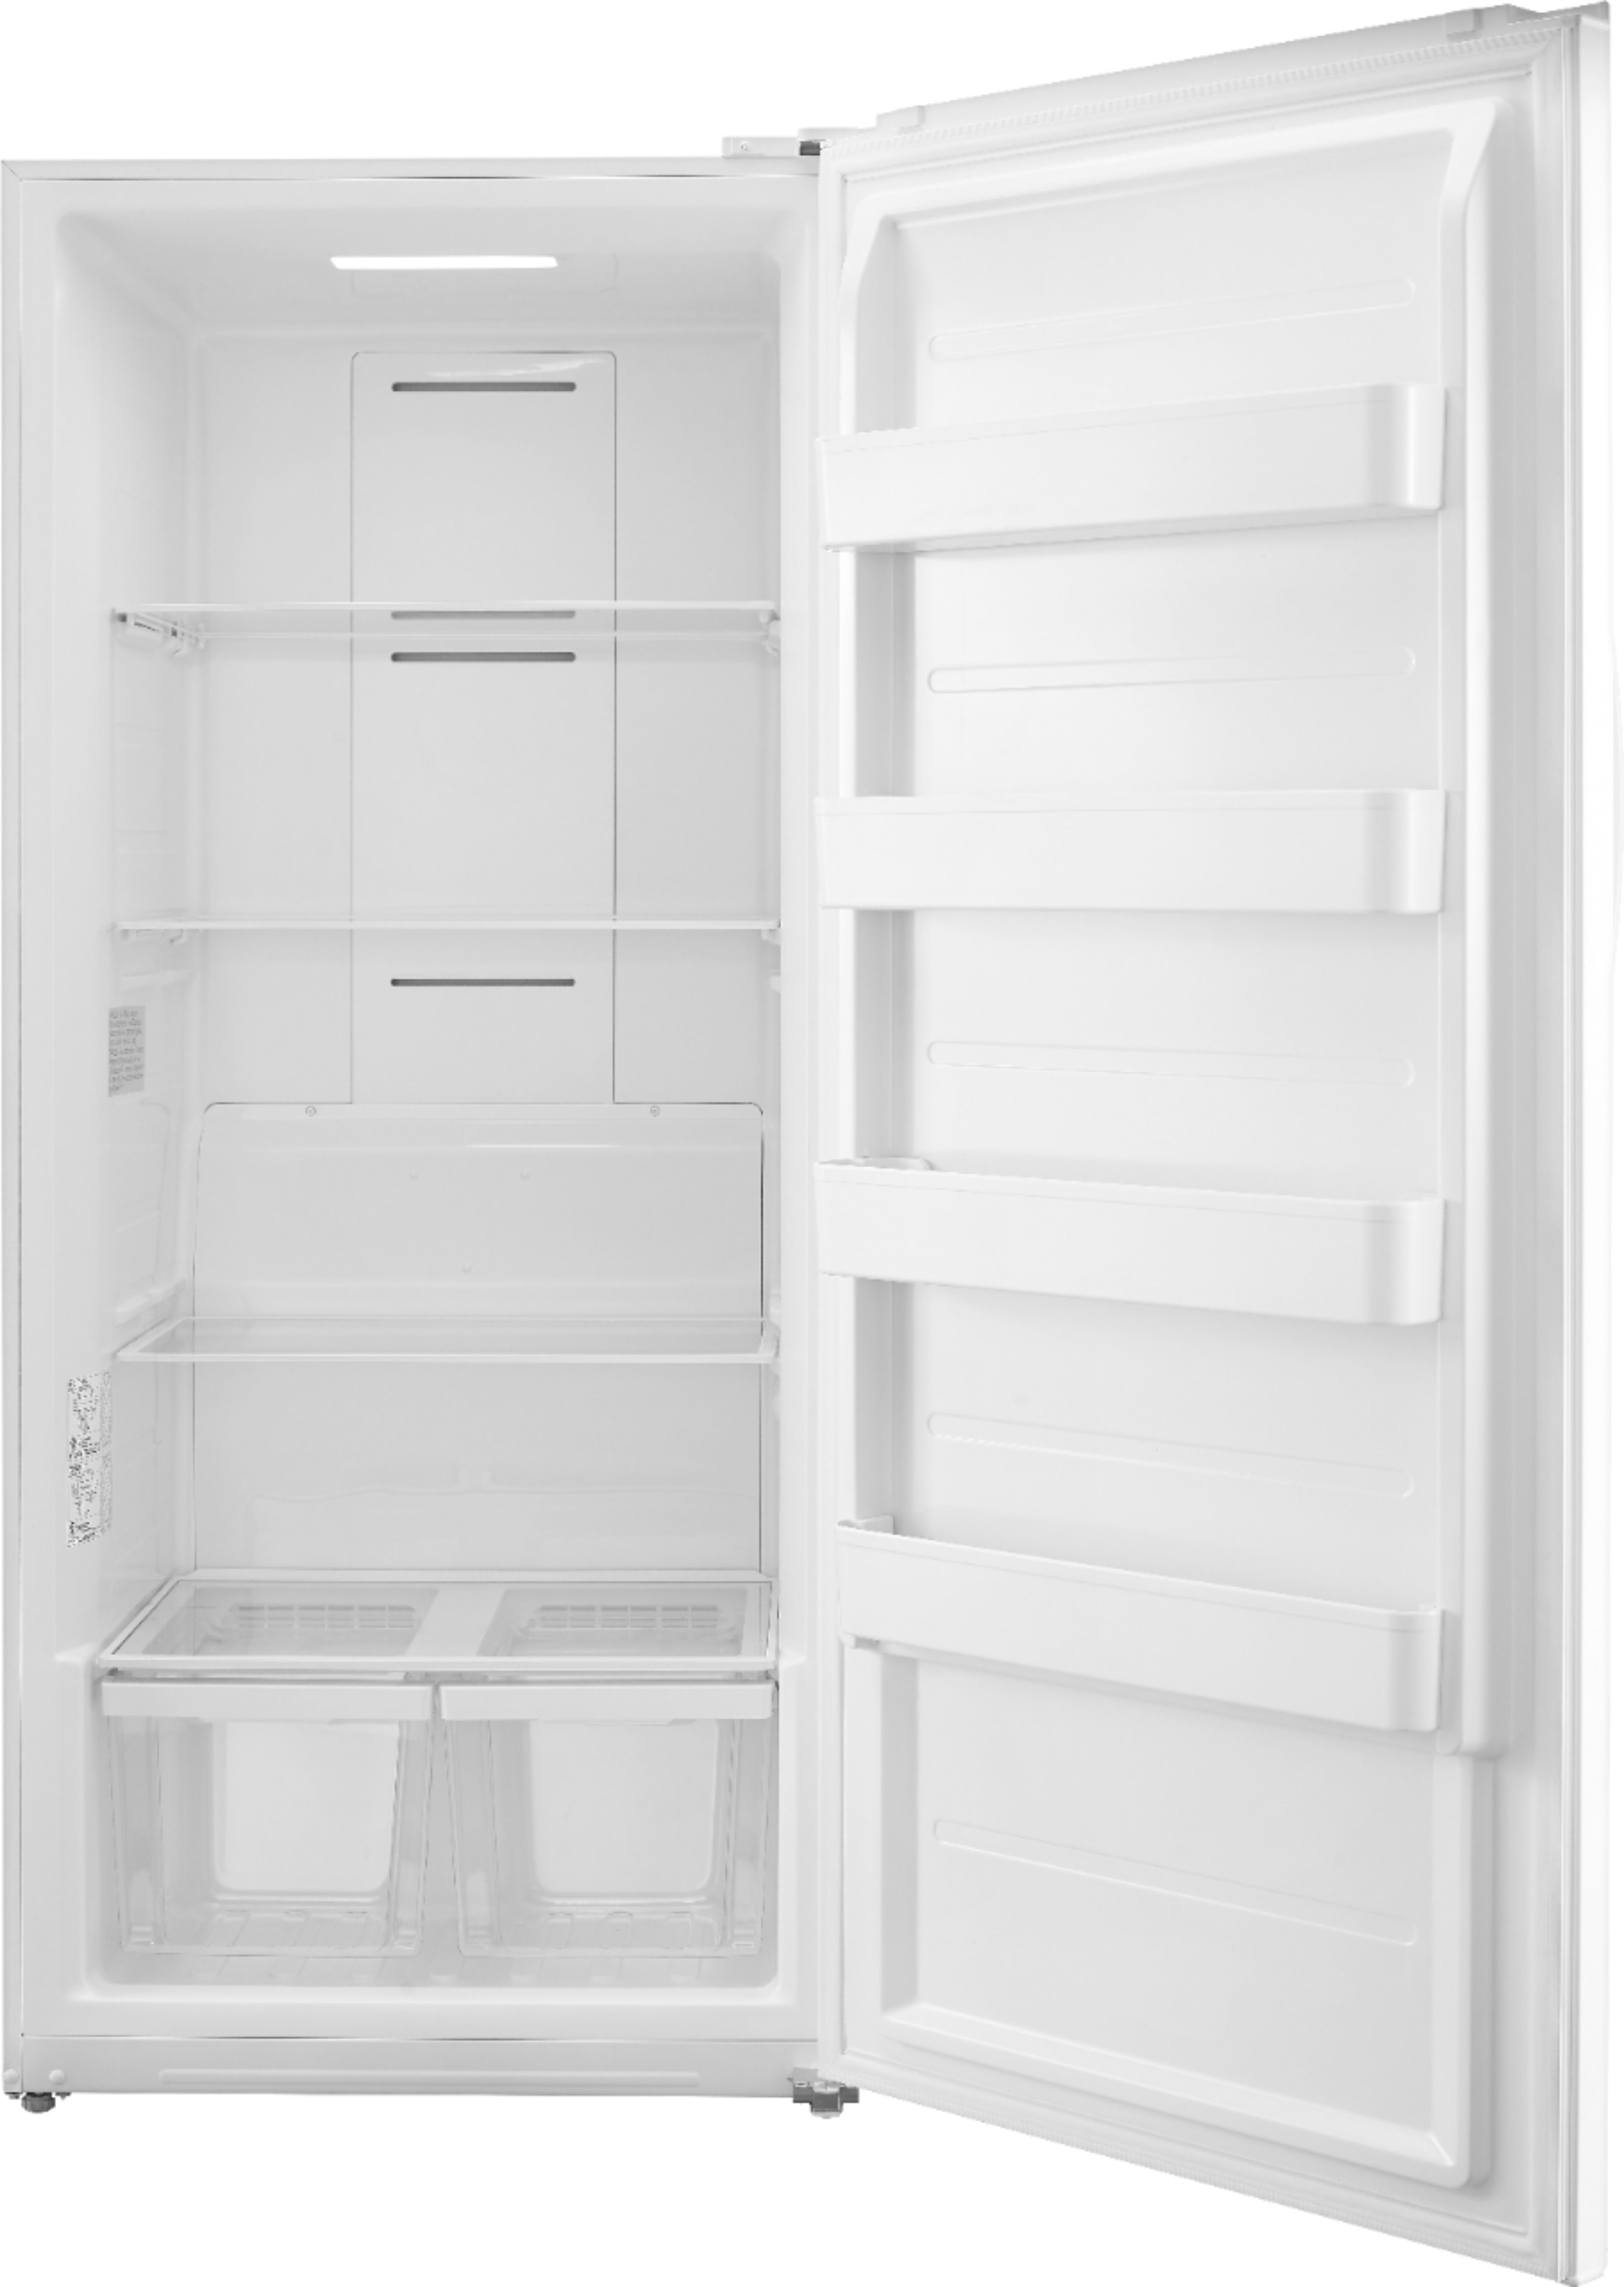 Refrigerator with freezer Admiral Single Door 21 Feet, ADUF77ML